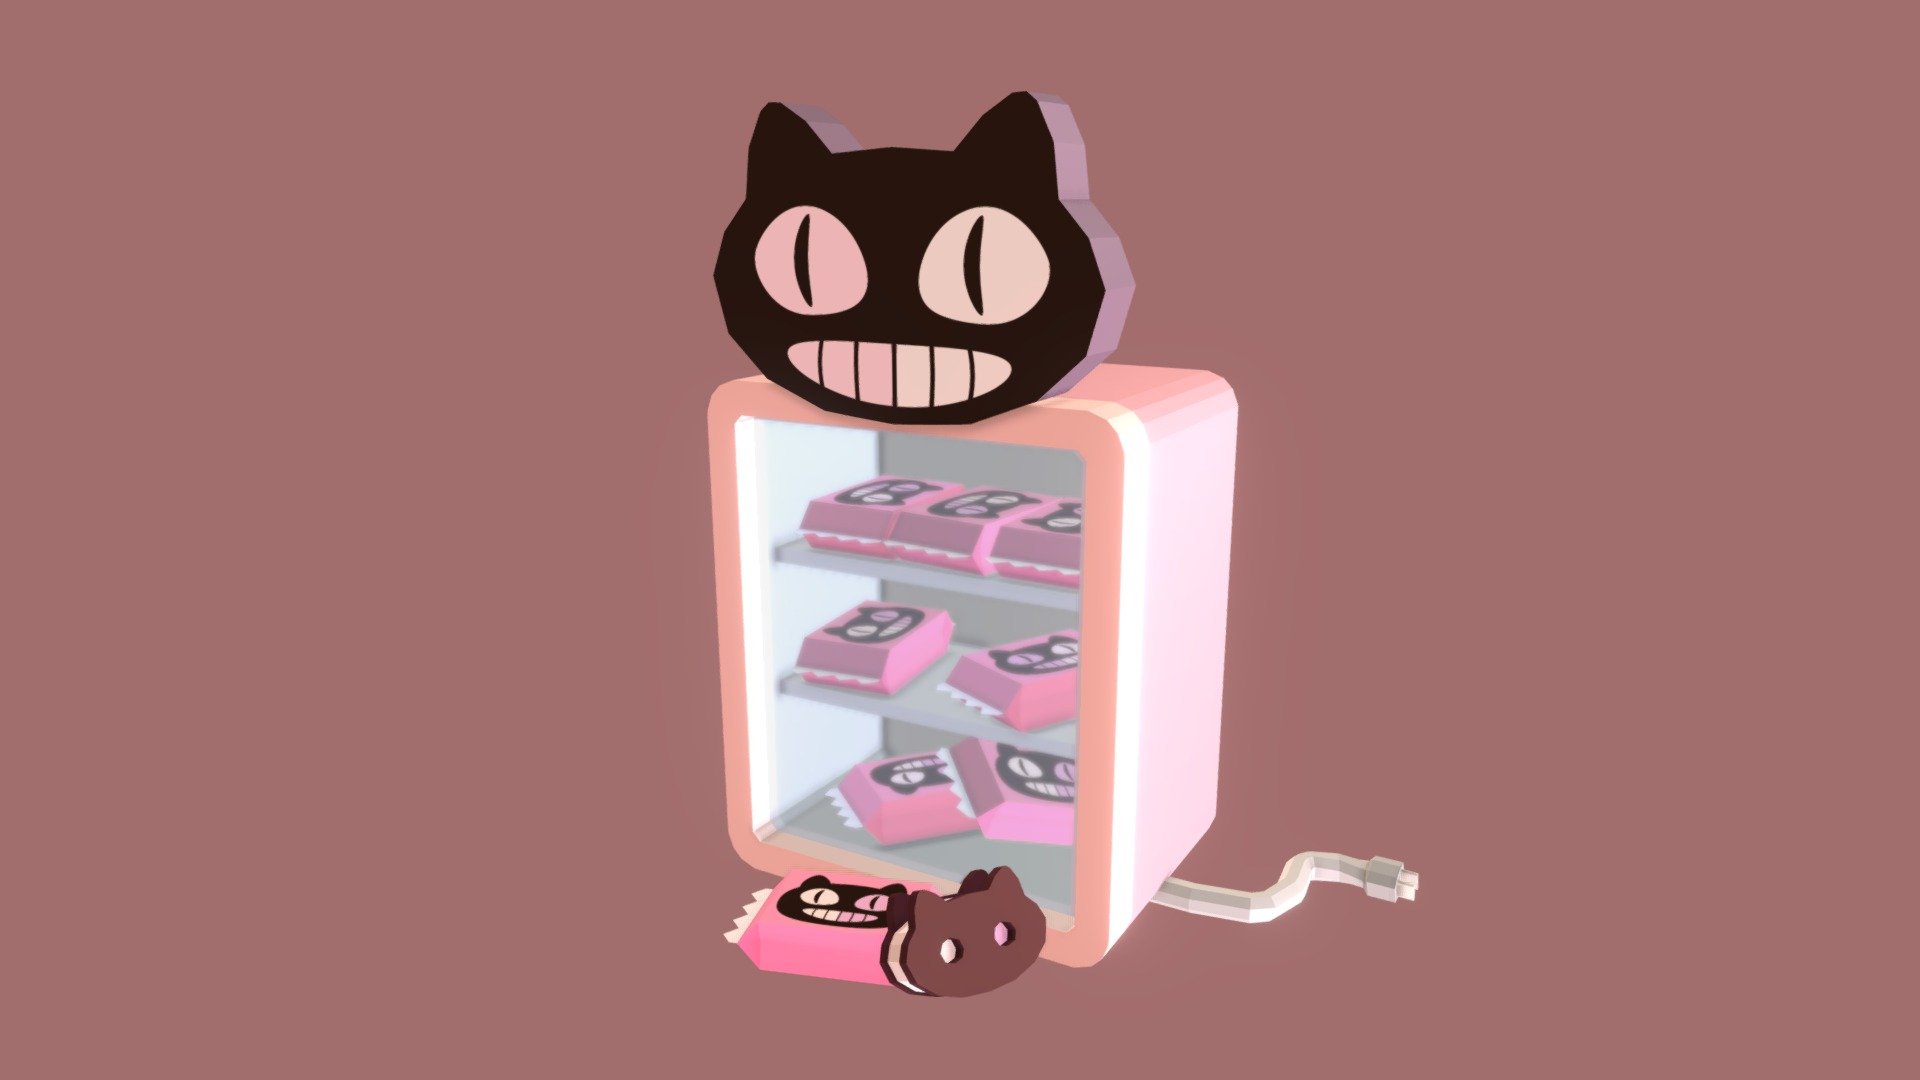 Cookie cat fan art, mini fridge included! - Cookie Cat - 3D model by Nicole "CmdrSpaceCat" Rusk (@cmdrspacecat) 3d model